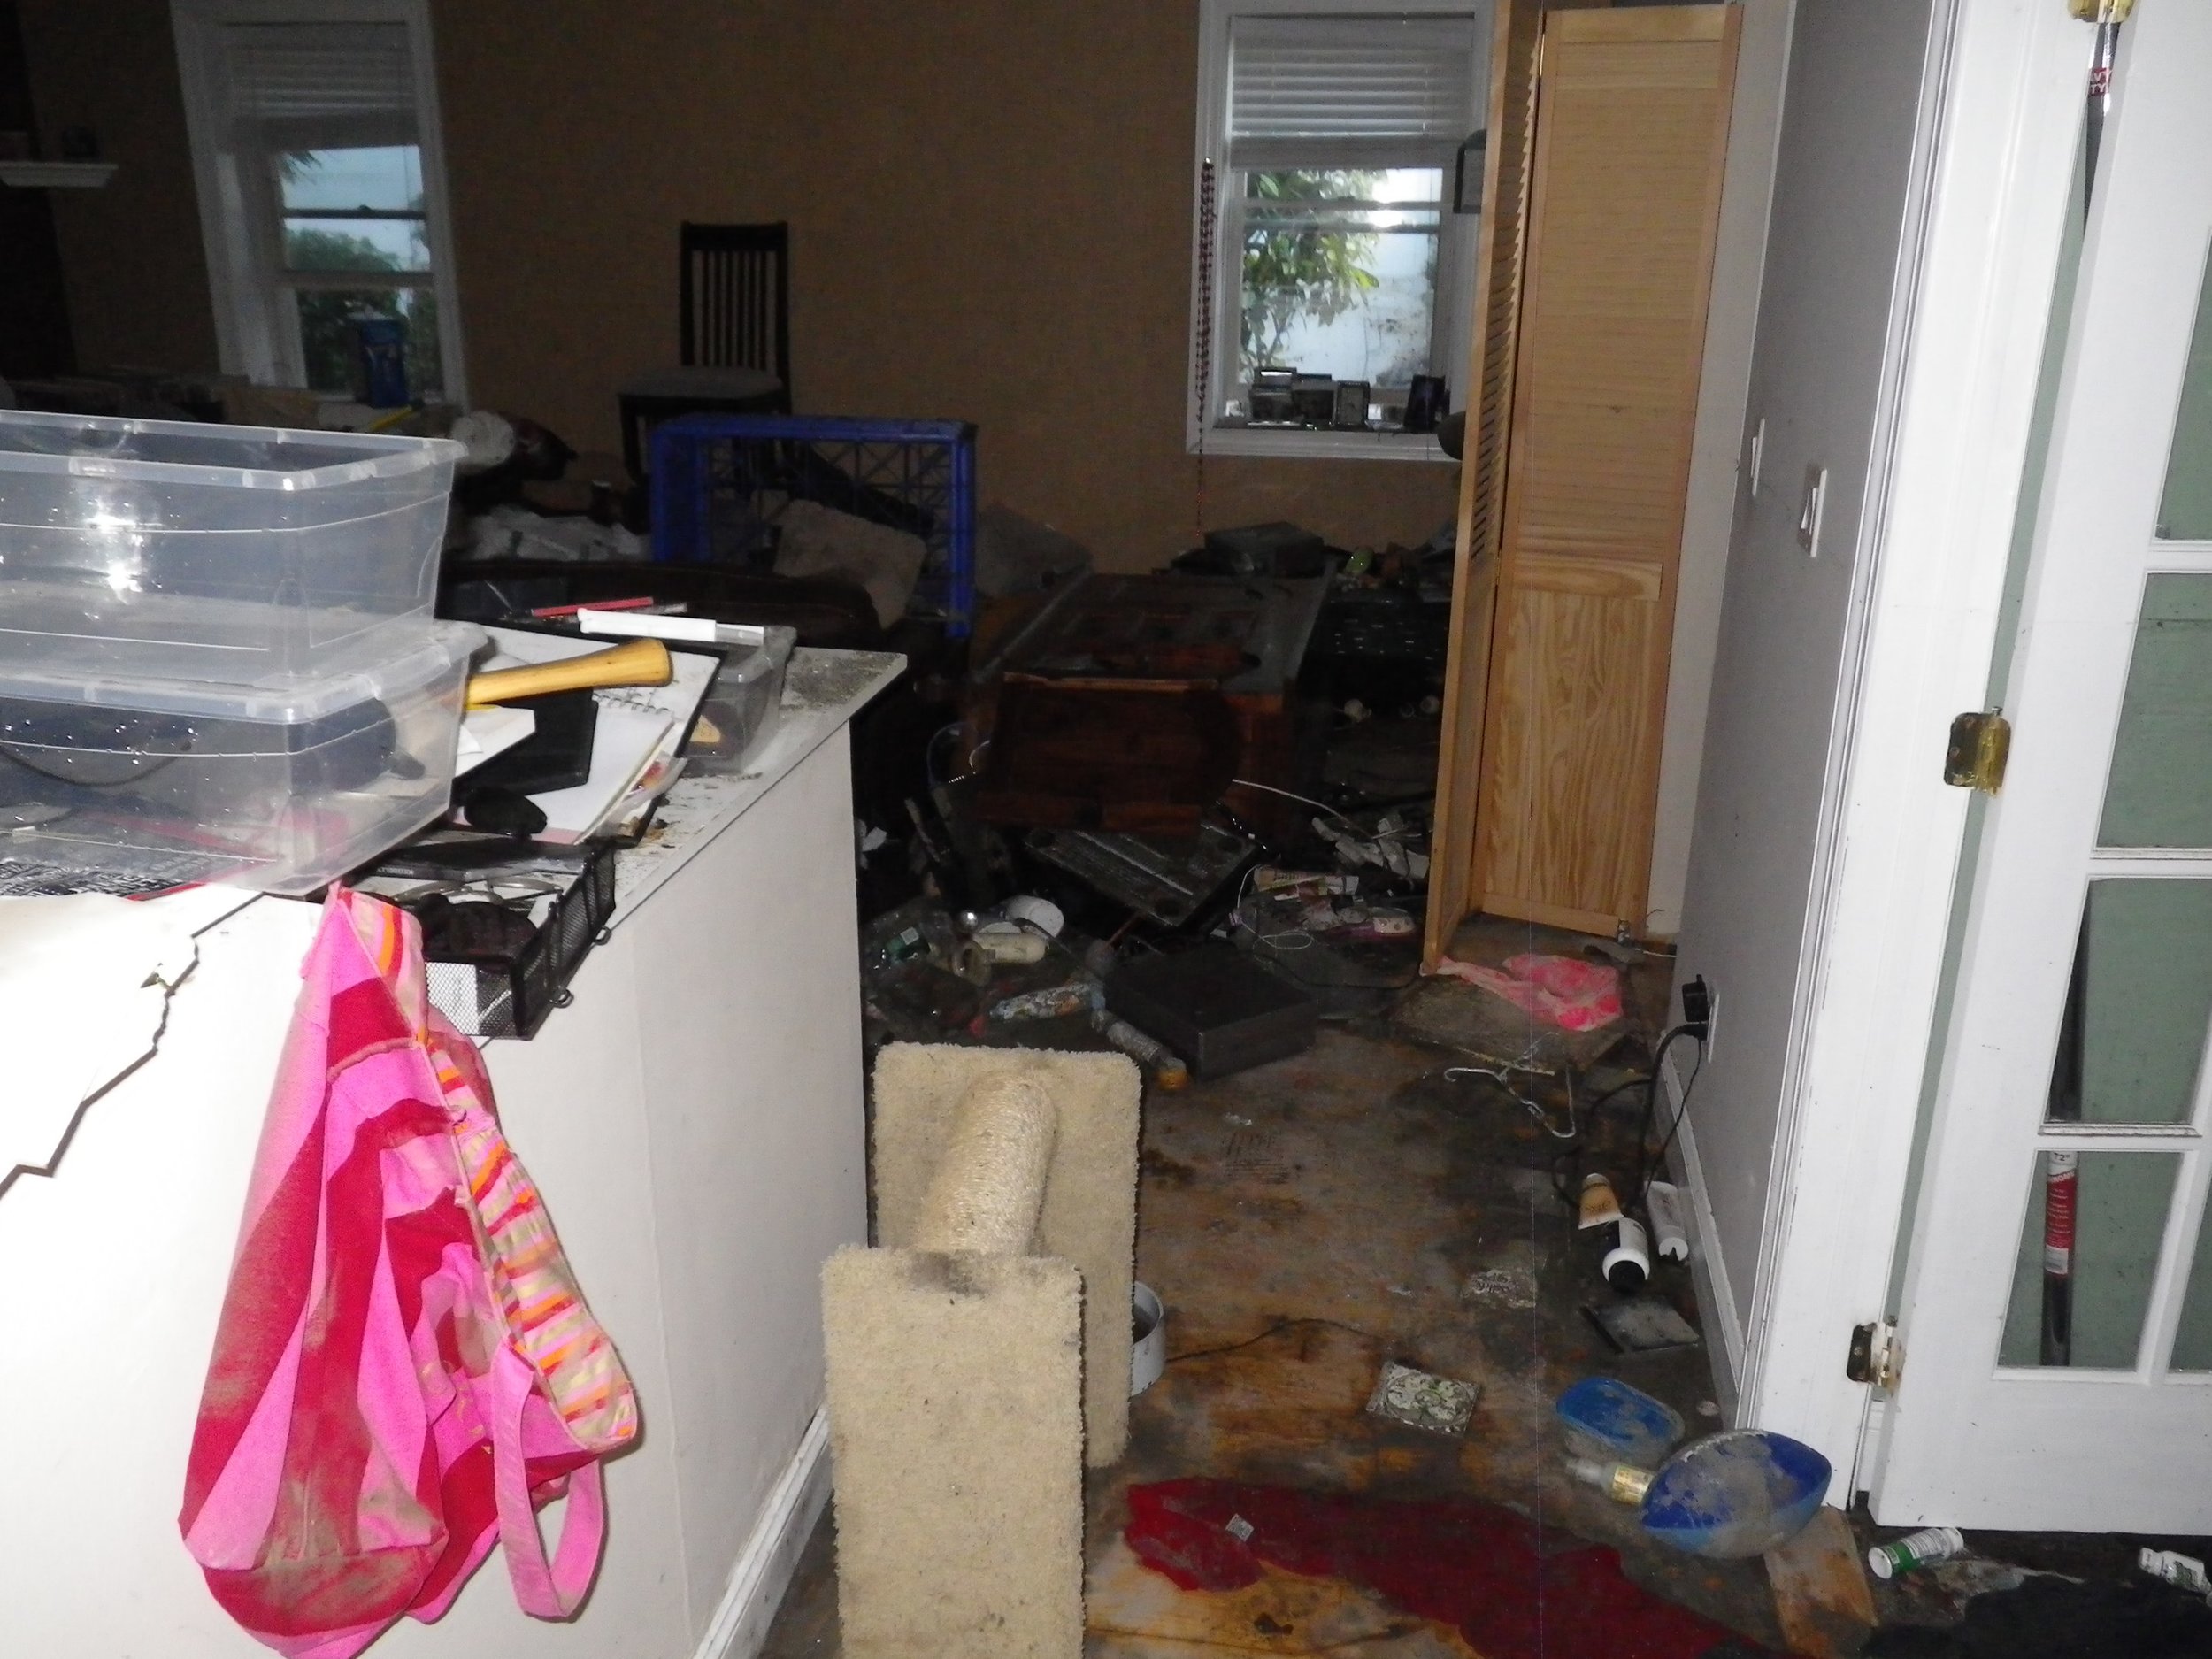 Stephen Serwin's Property - After Sandy